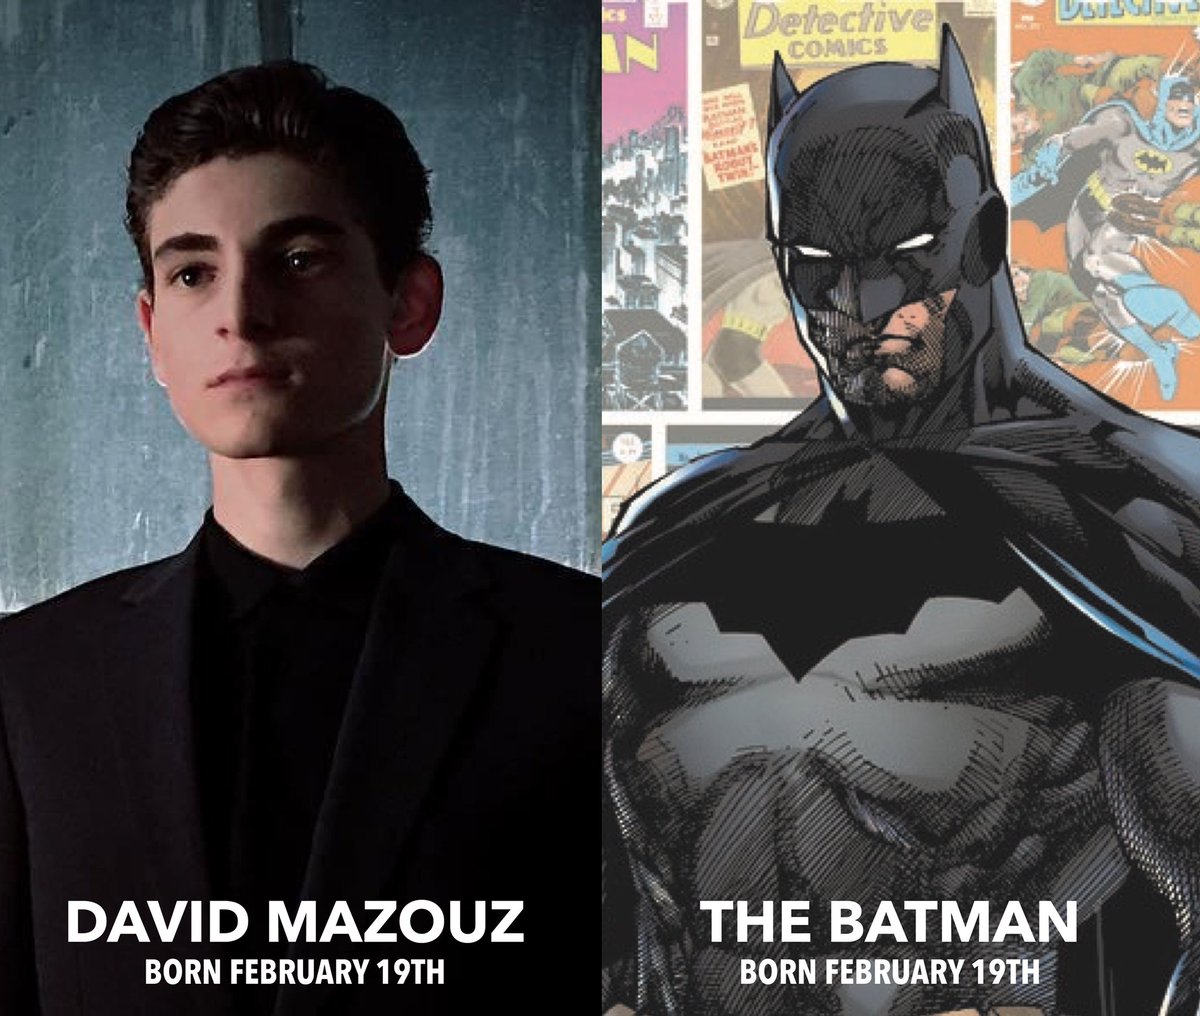 Gotham Hub on X: "On this day in fictional history, Batman was born. On this day in actual history, David Mazouz was born. Happy Birthday to both Dark Knights! #GOTHAM @realdavidmazouz https://t.co/xHogQnsCDD" /